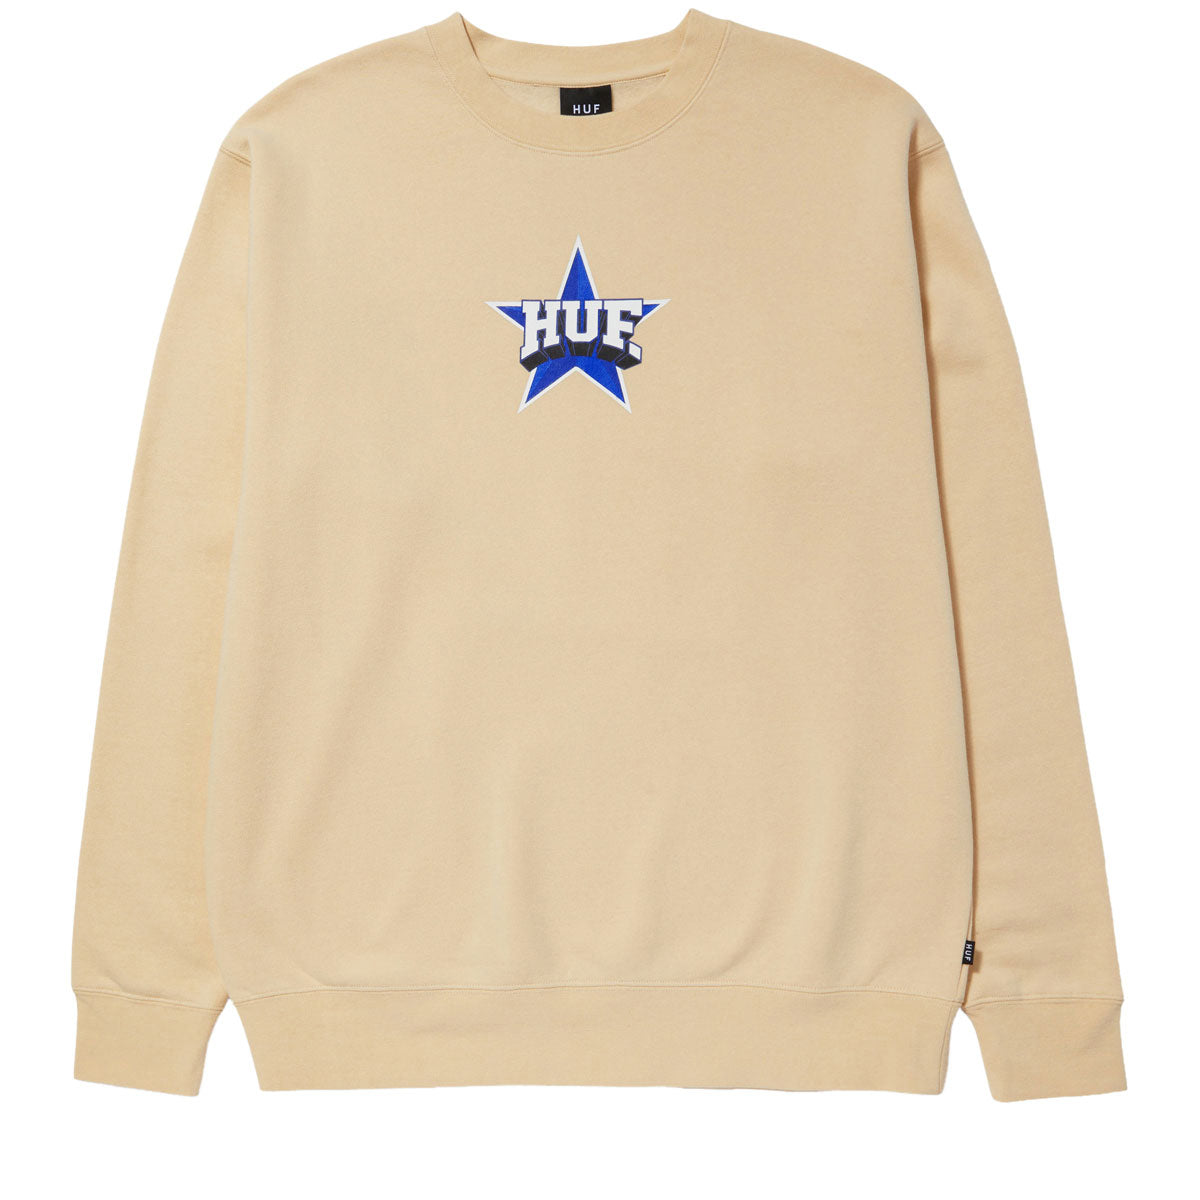 HUF All Star Crewneck Sweatshirt - Wheat image 1